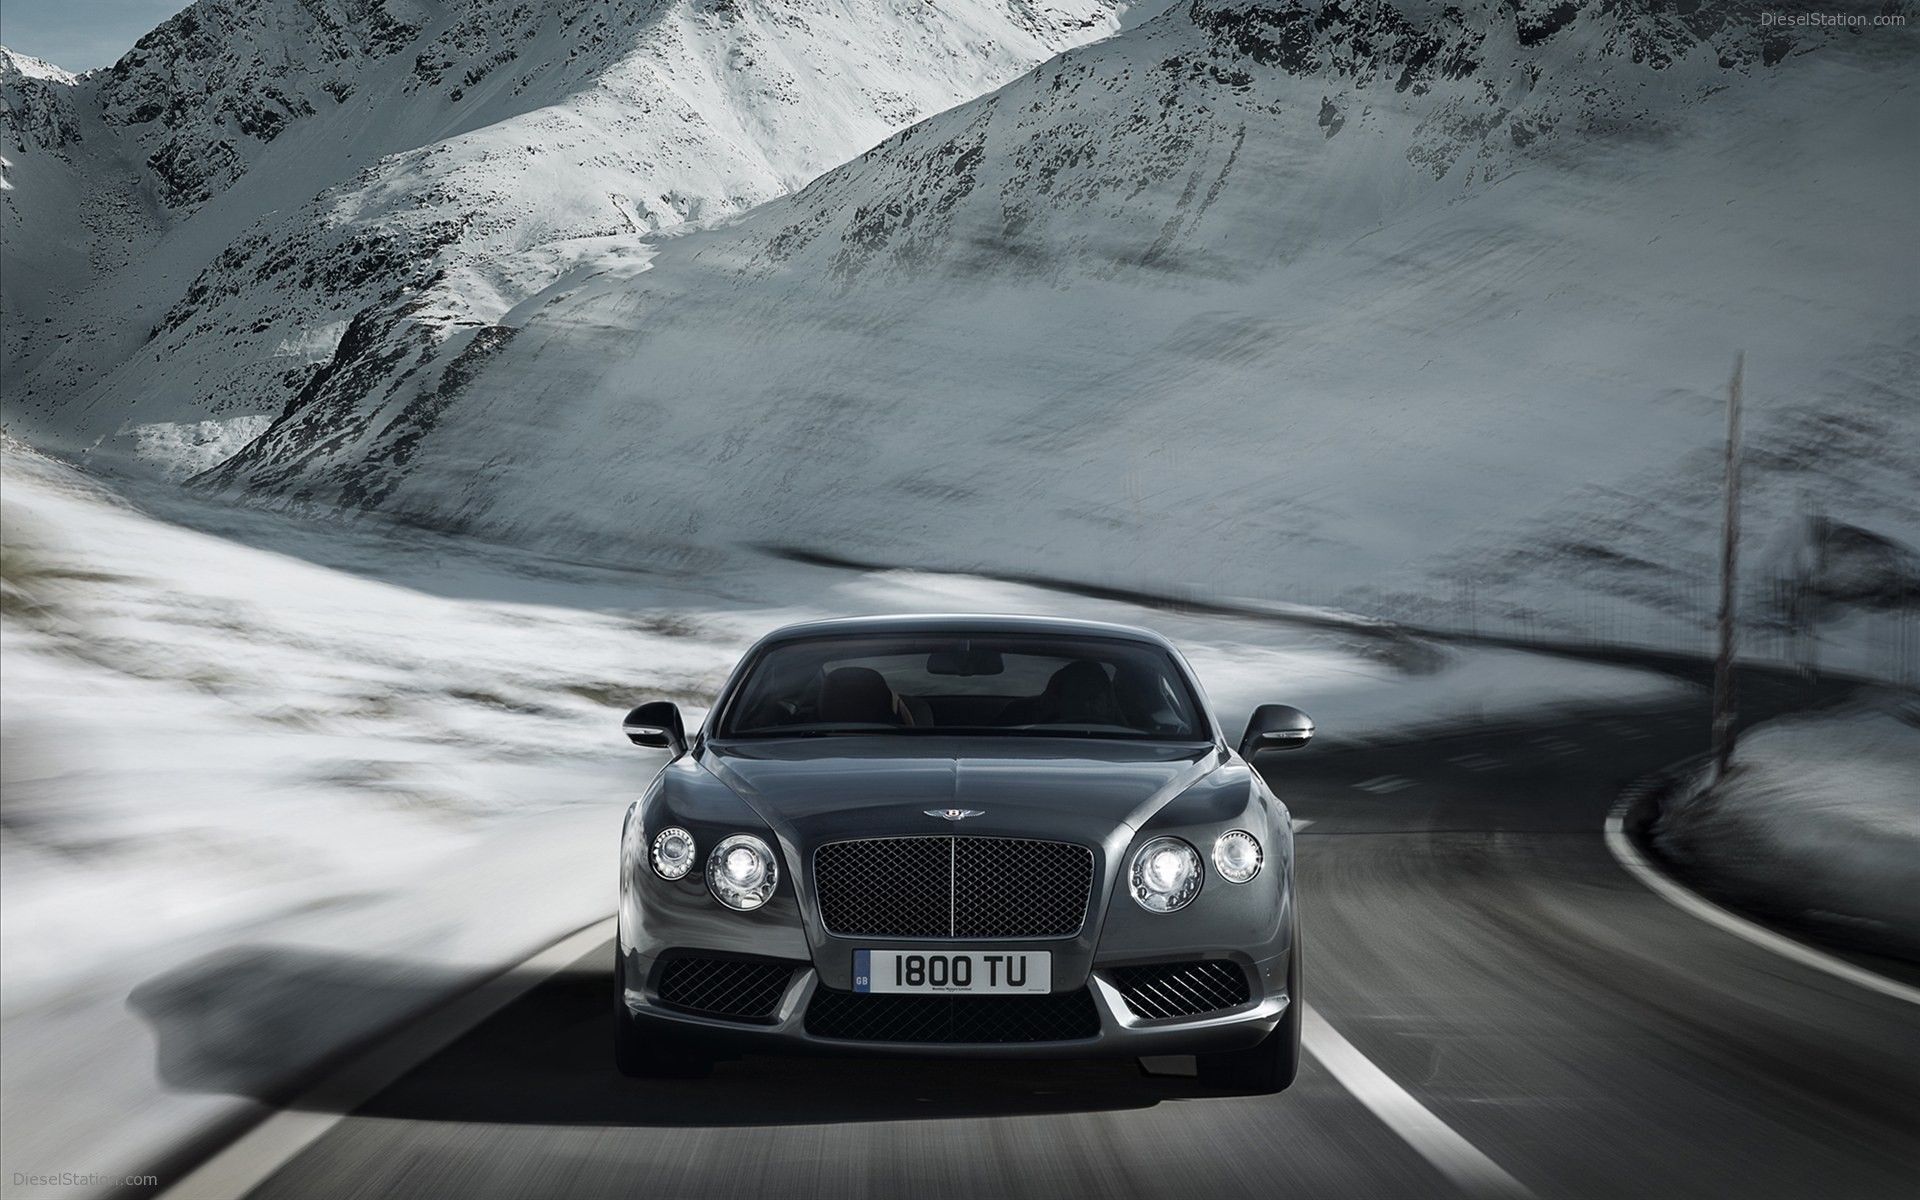 Bentley Continental GT V8 2012 .dieselstation.com